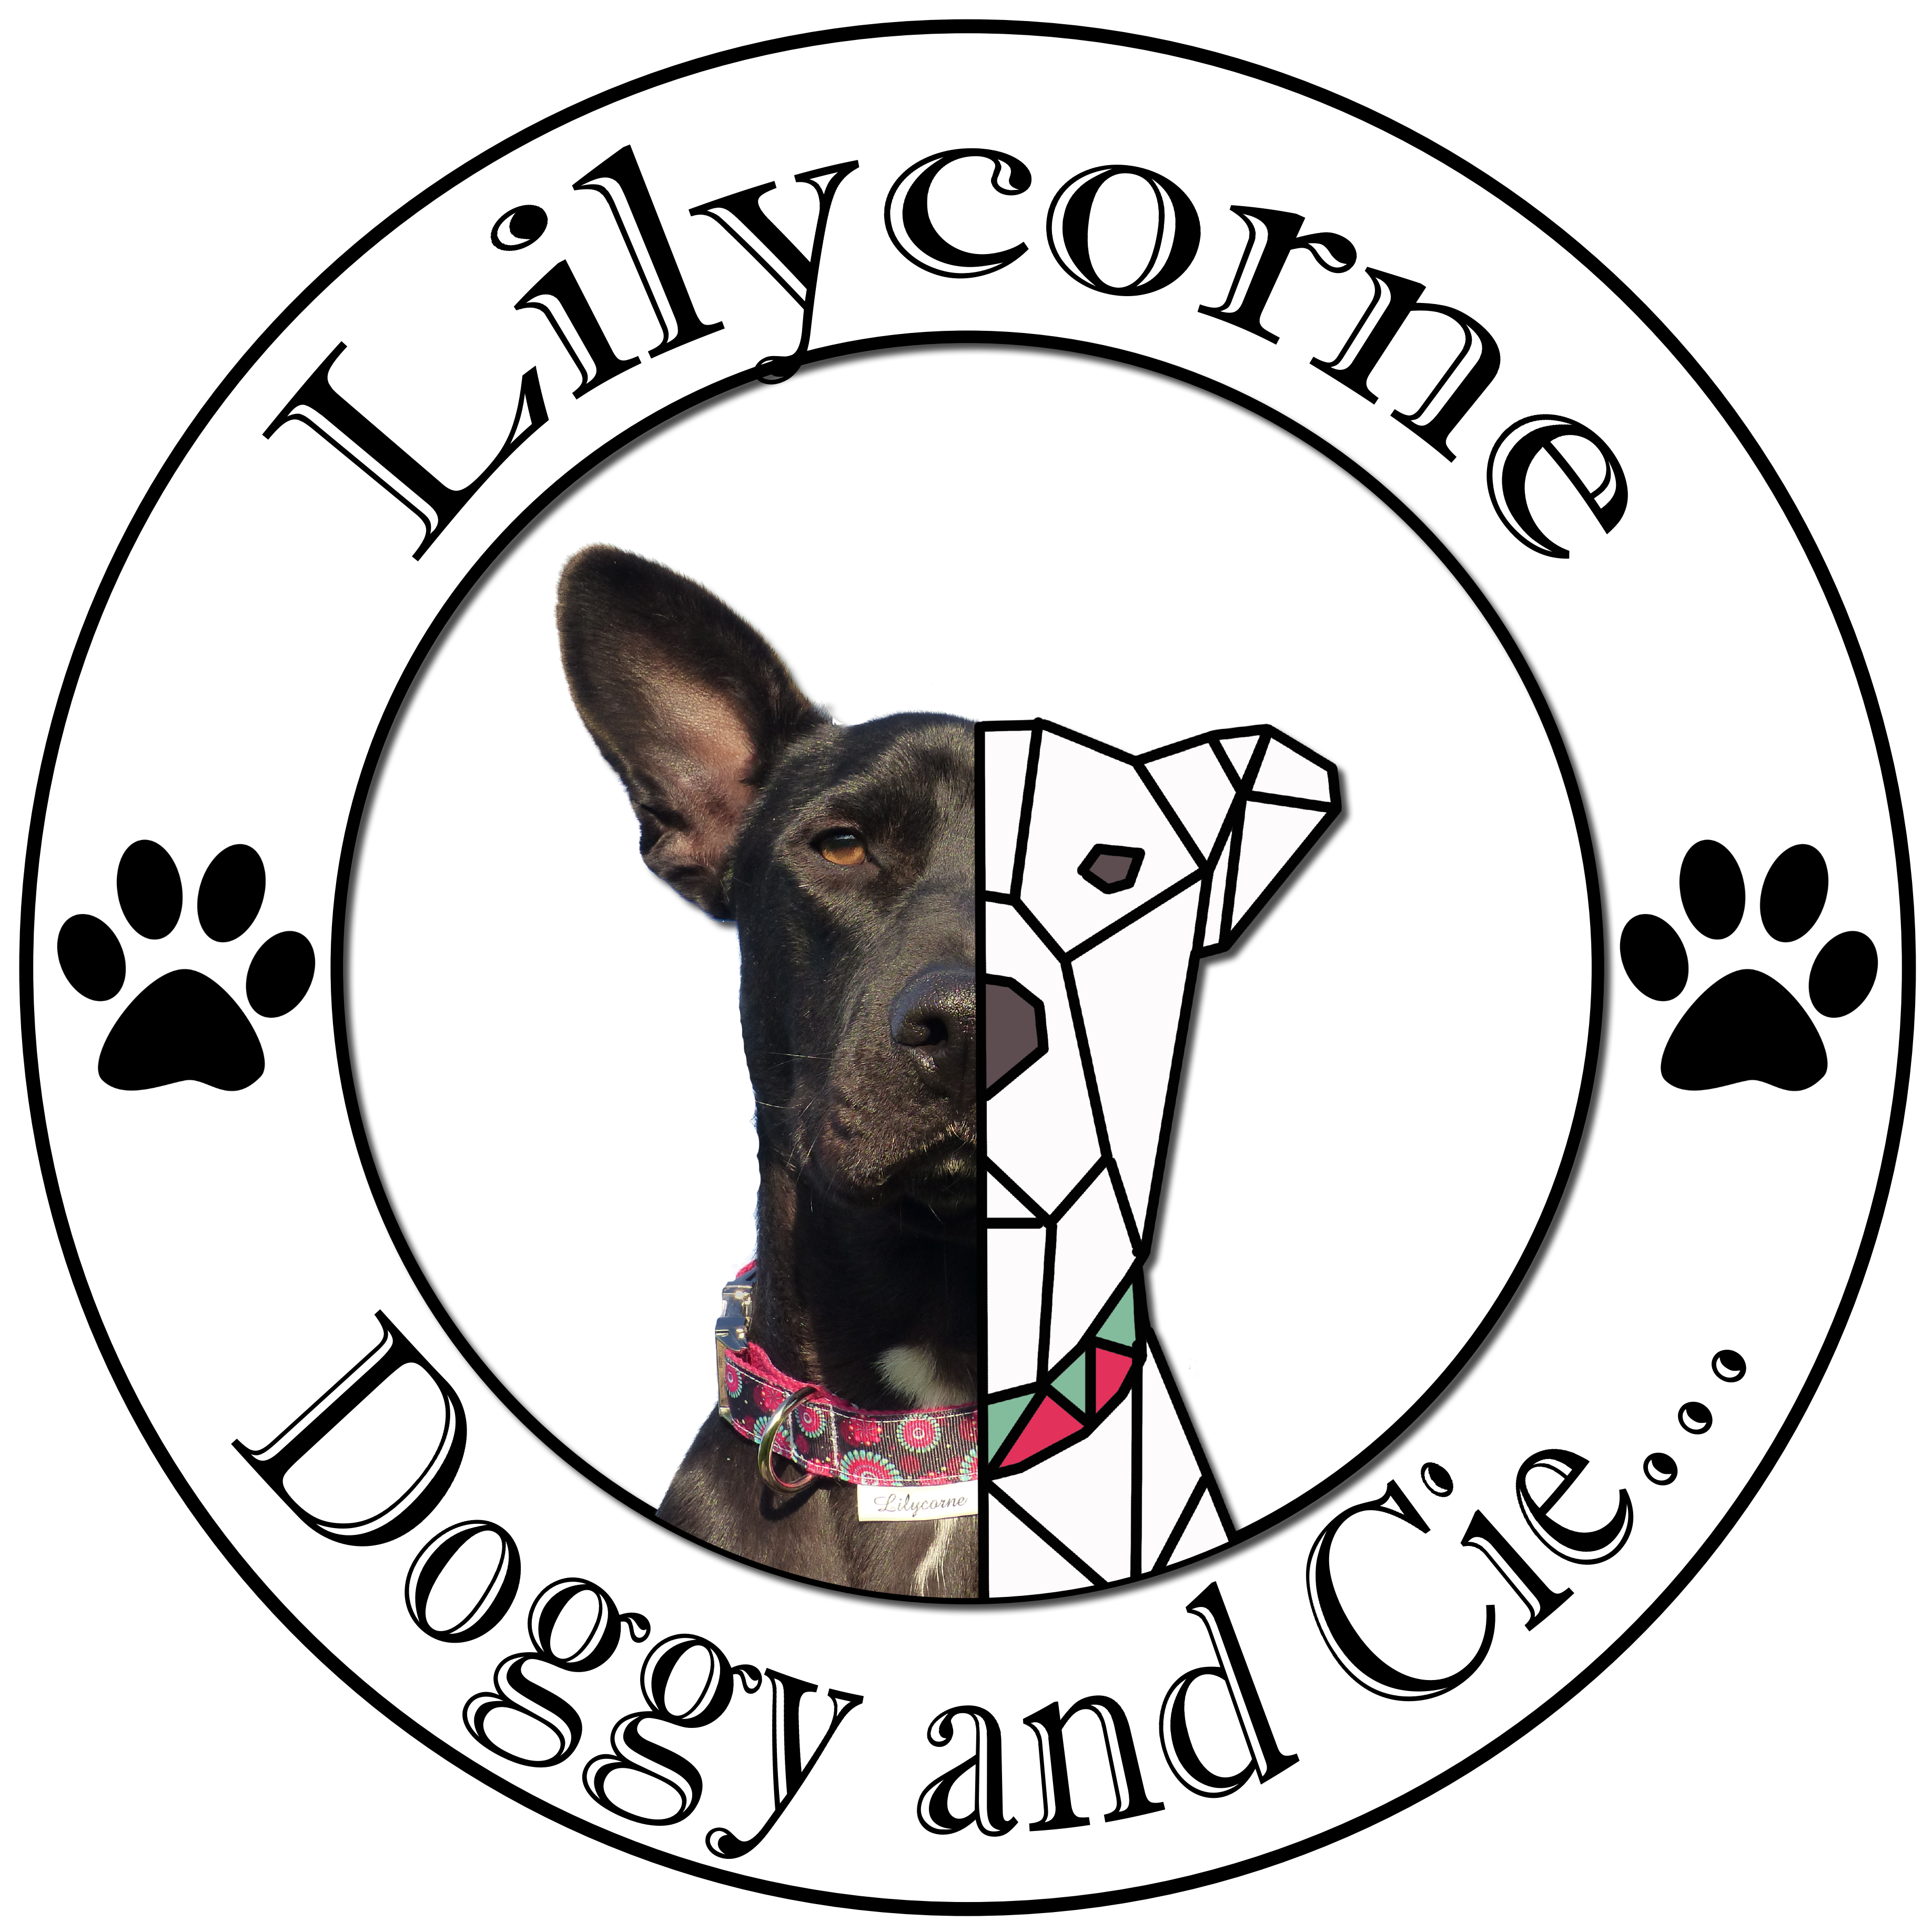 Lilycornedoggy store logo